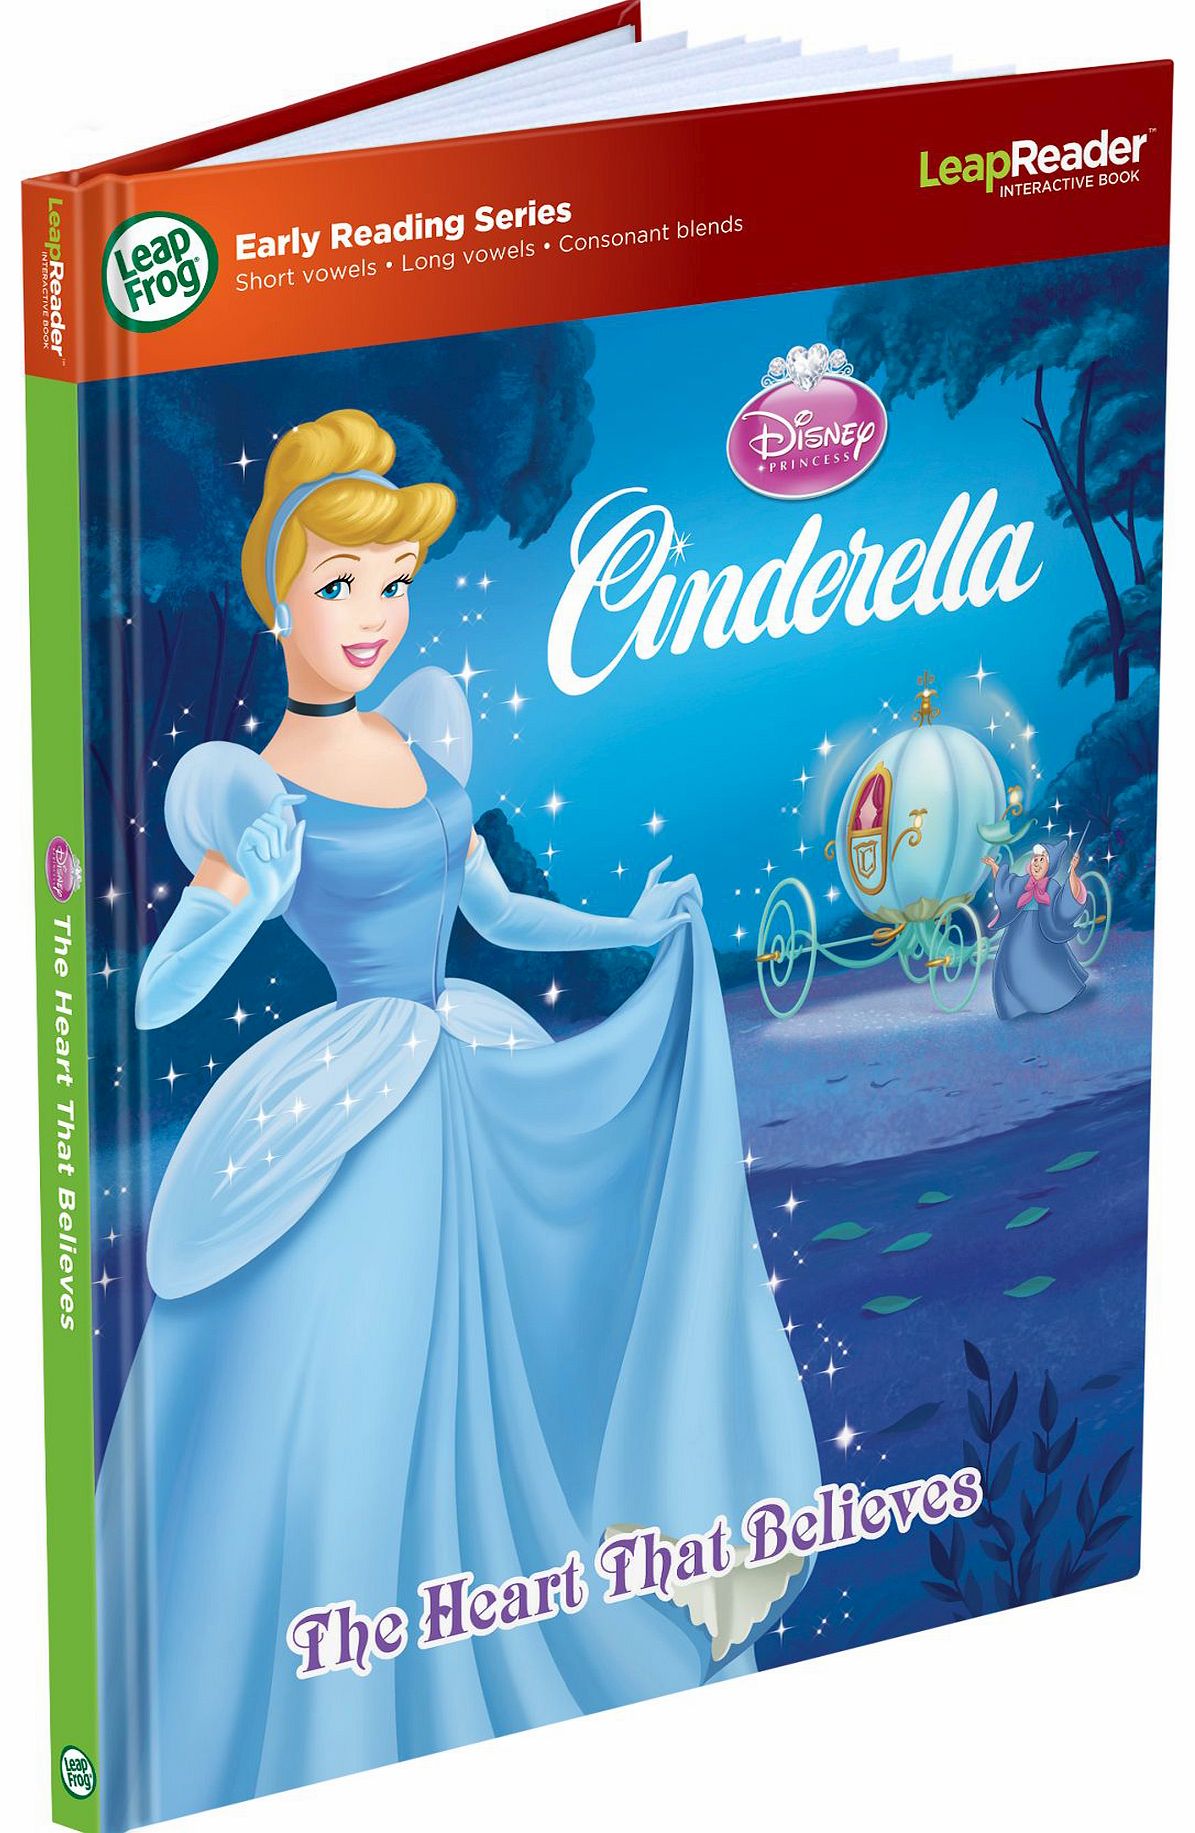 LeapReader Early Reader Storybook - Cinderella